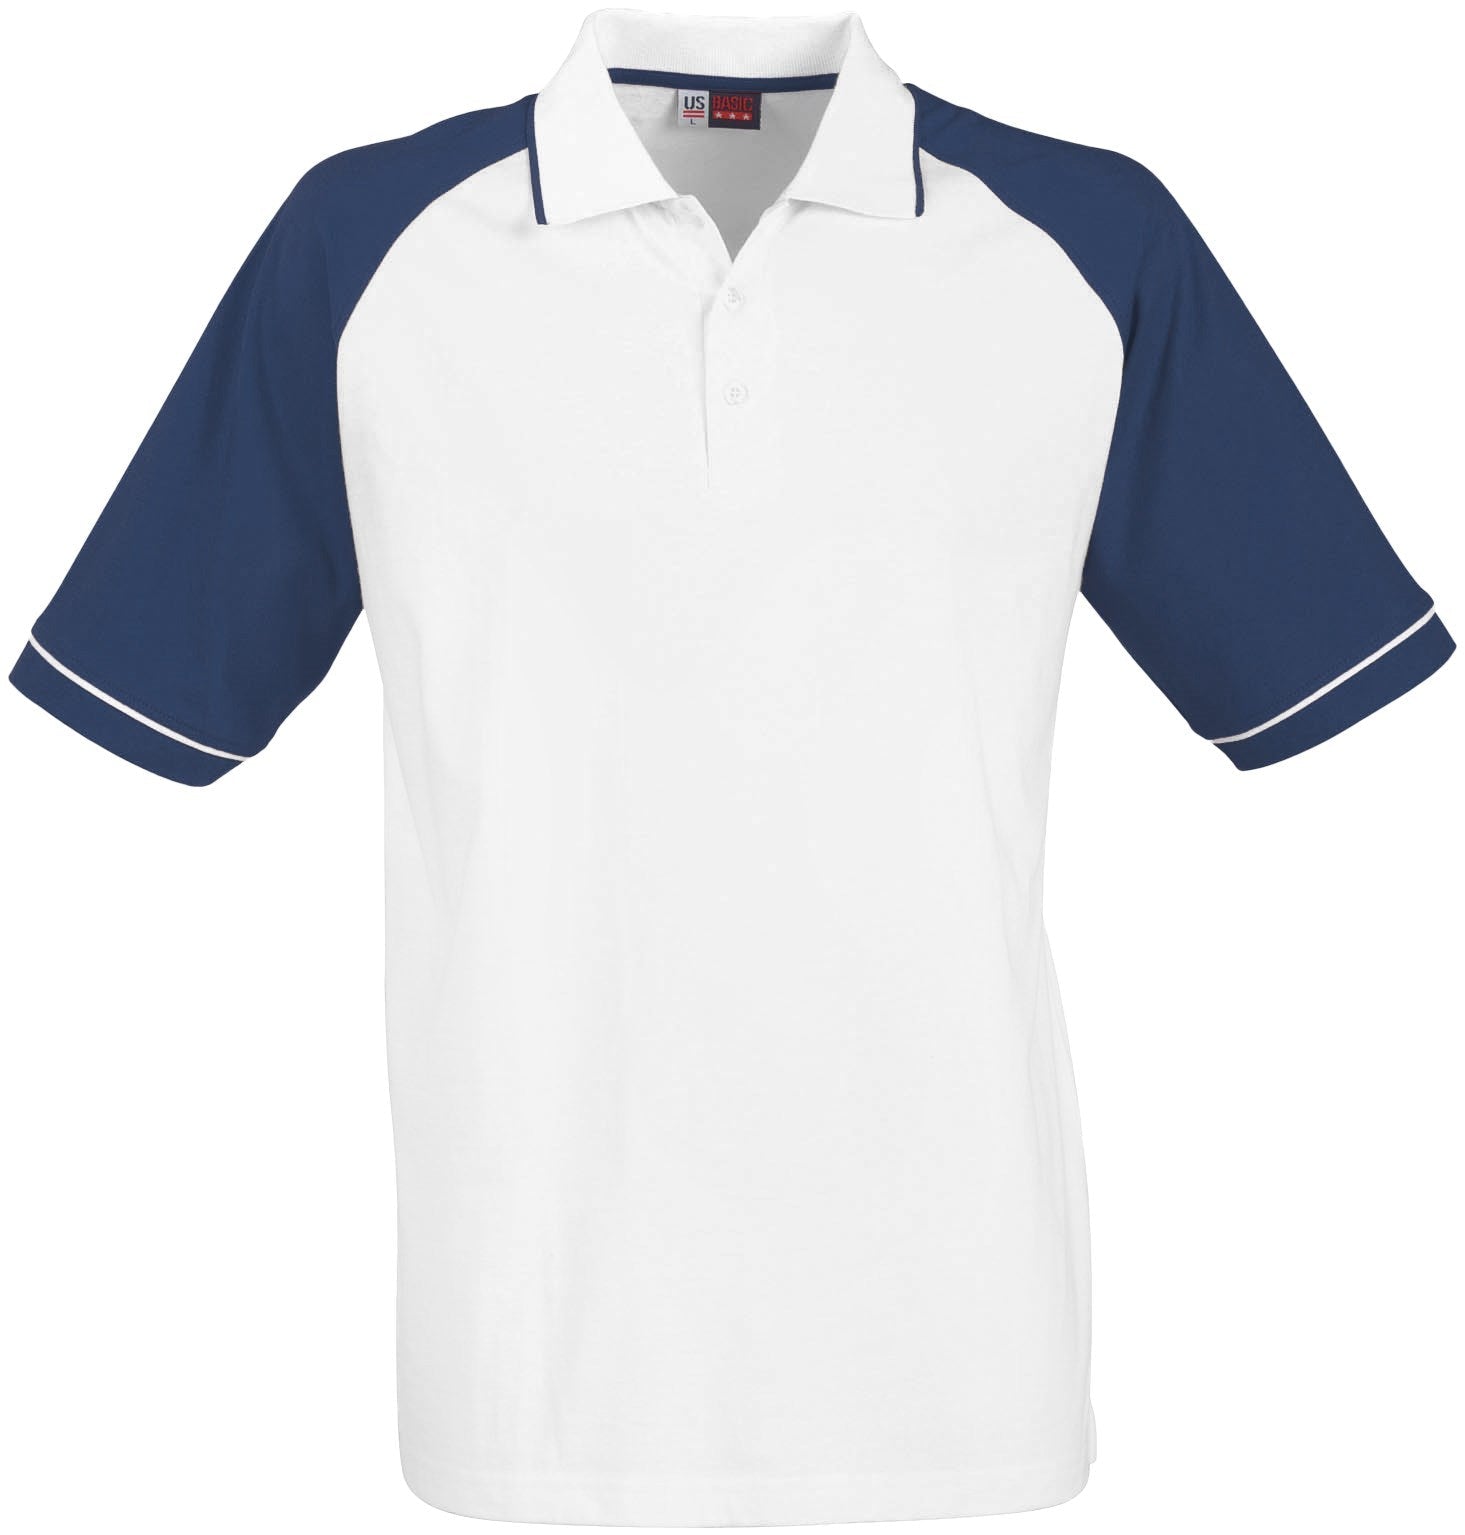 Mens Sydney Golf Shirt - Black Only-2XL-Navy-N